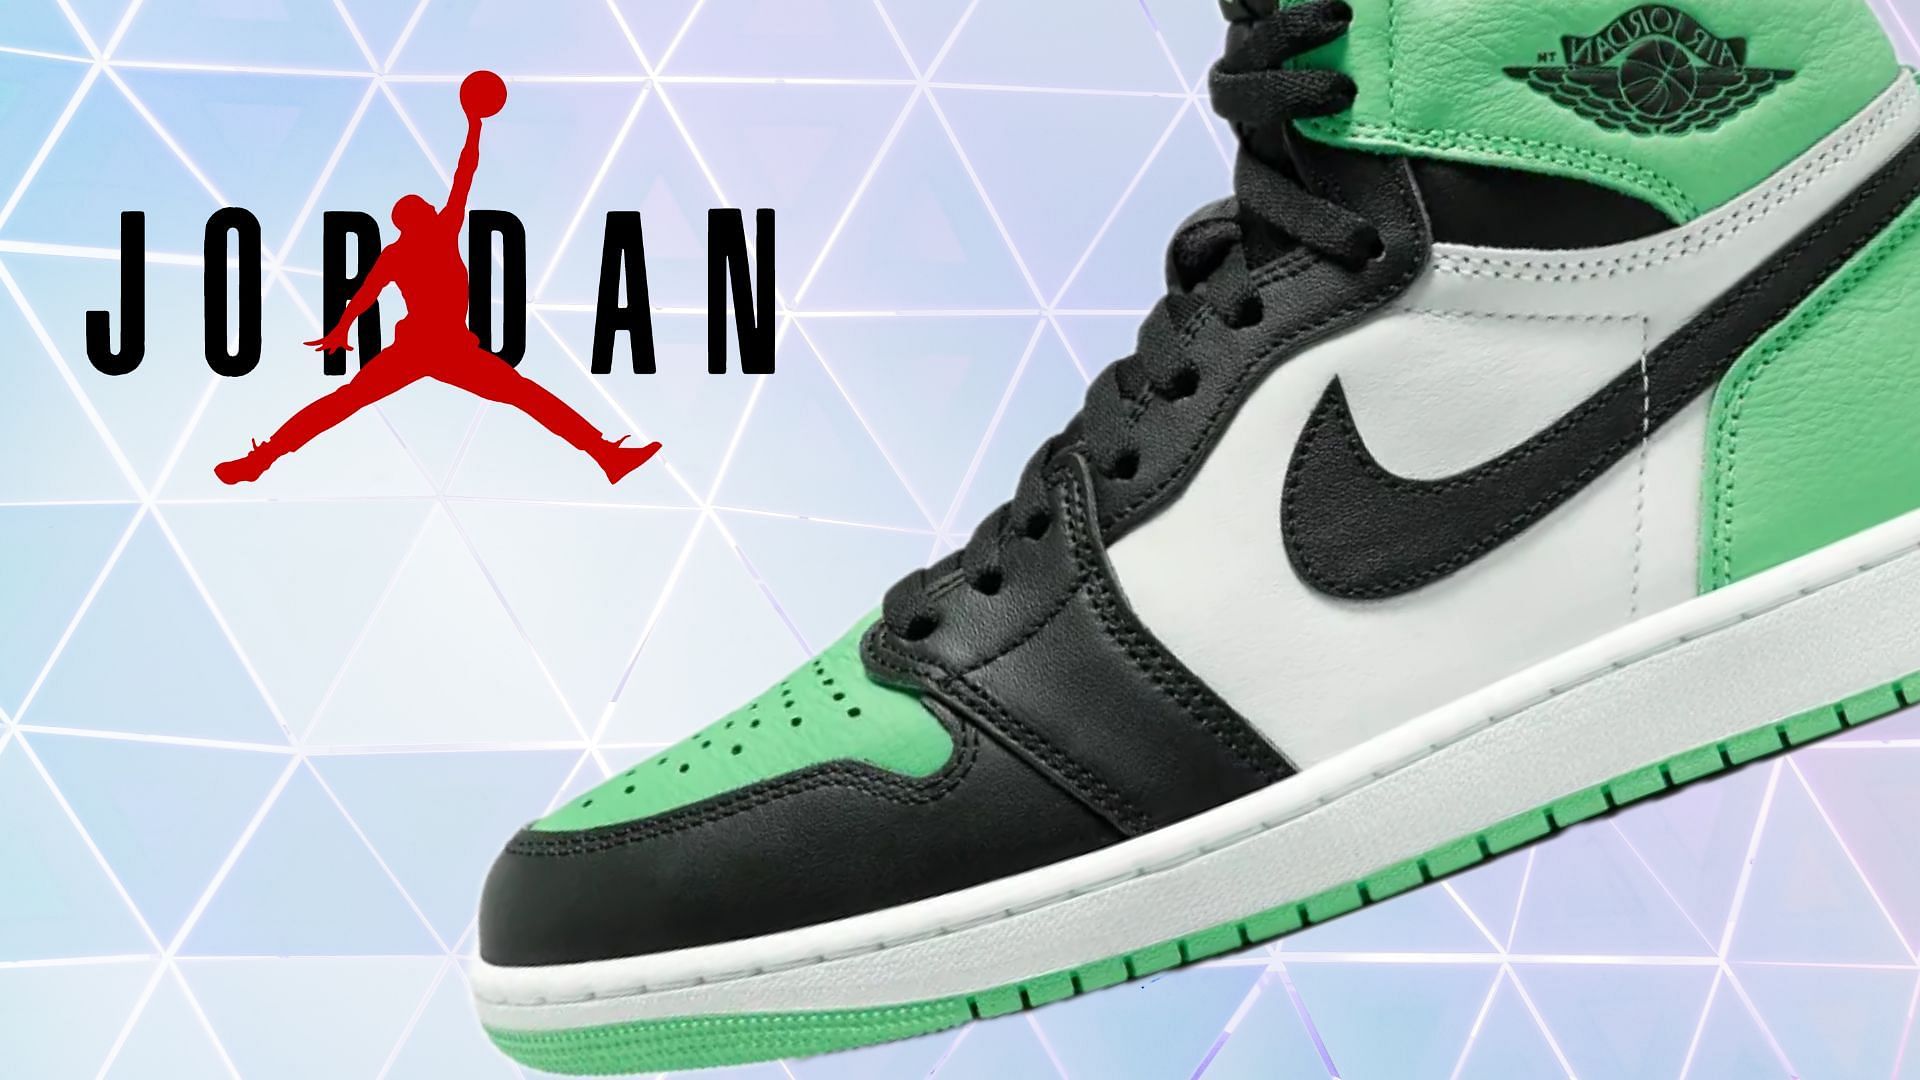 Air Jordan 1 High Glow Green shoes (Image via Instagram/@zsneakerheadz)